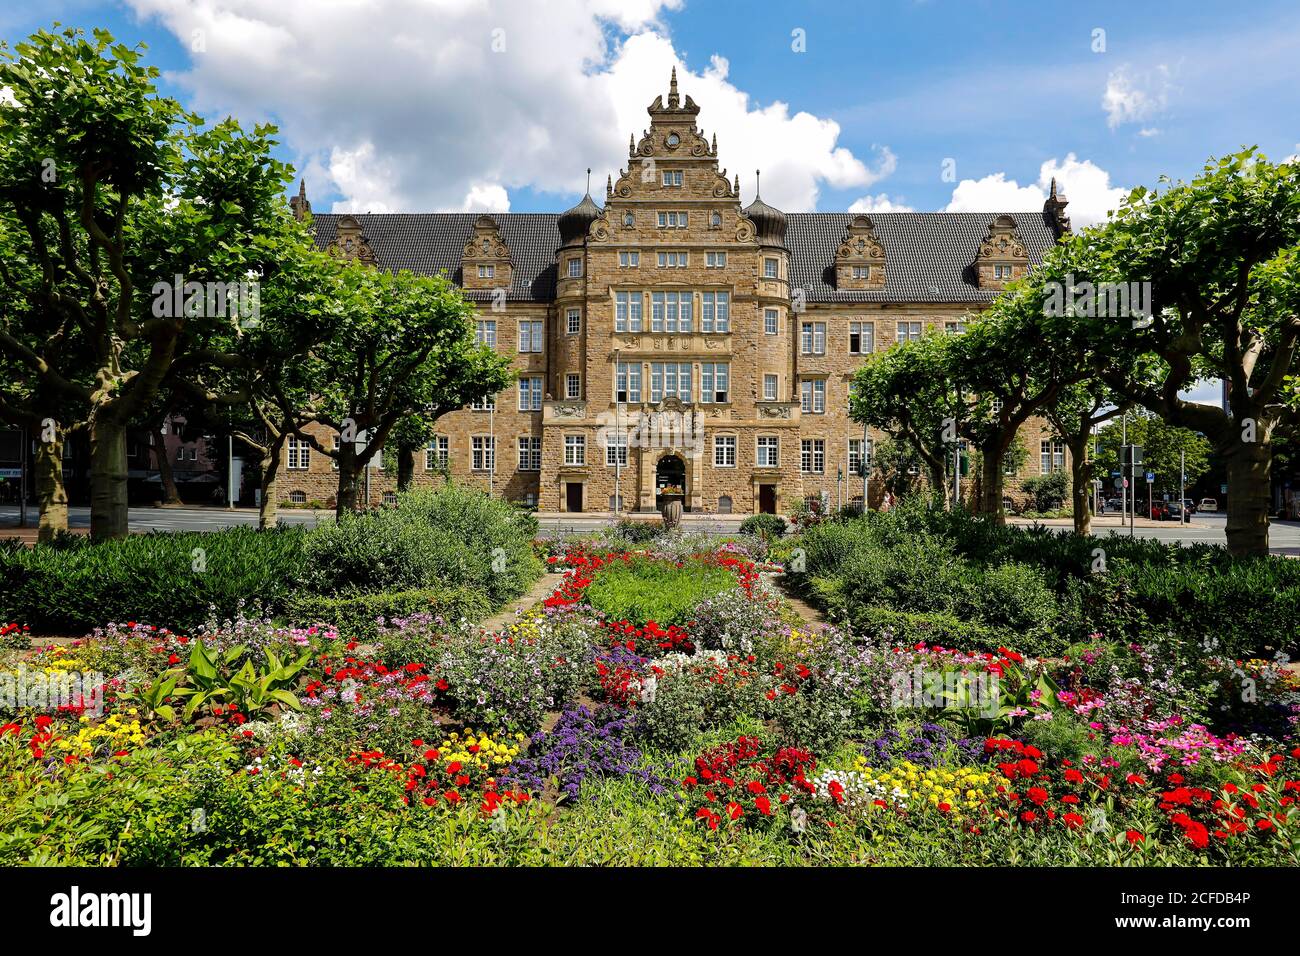 Local court and flowerbeds at Friedensplatz, Oberhausen, Ruhr area, North Rhine-Westphalia, Germany Stock Photo